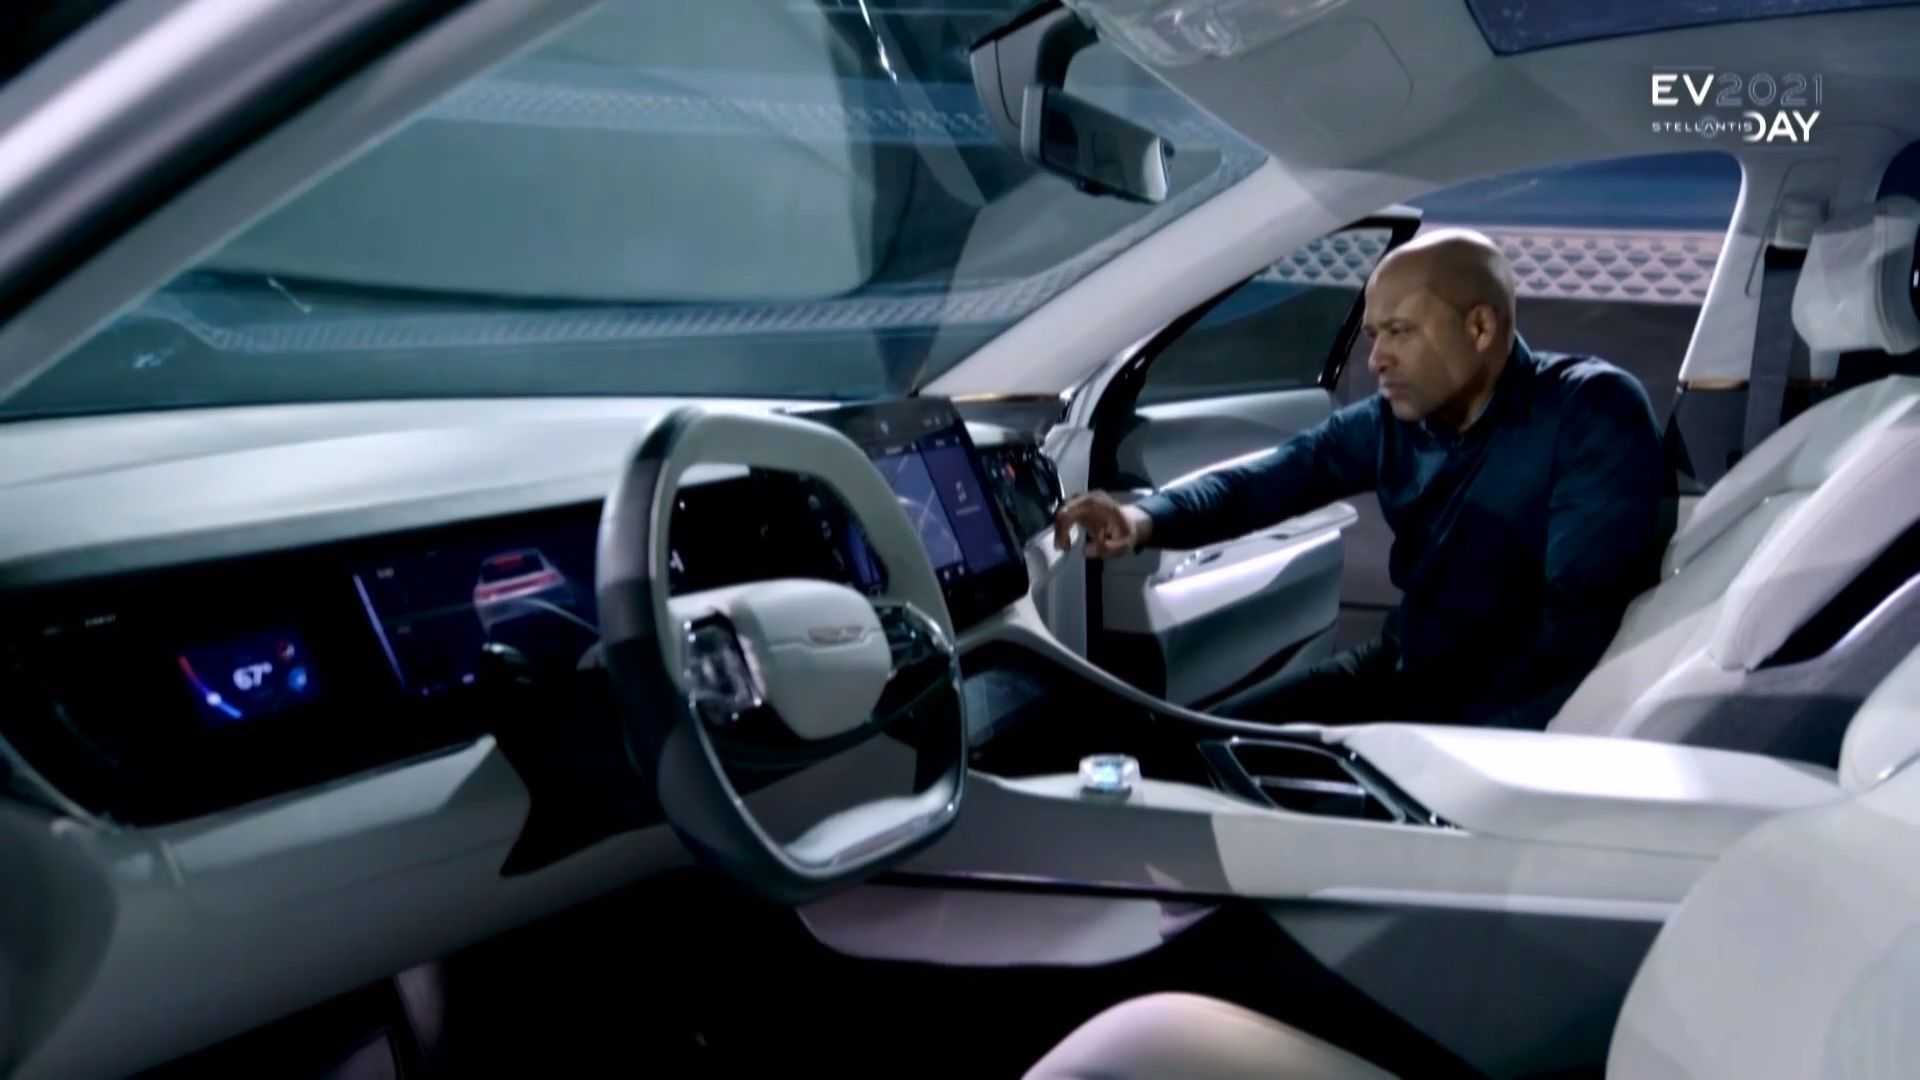 Chrysler Shows Its Latest Airflow Vision Concept On the Stellantis EV